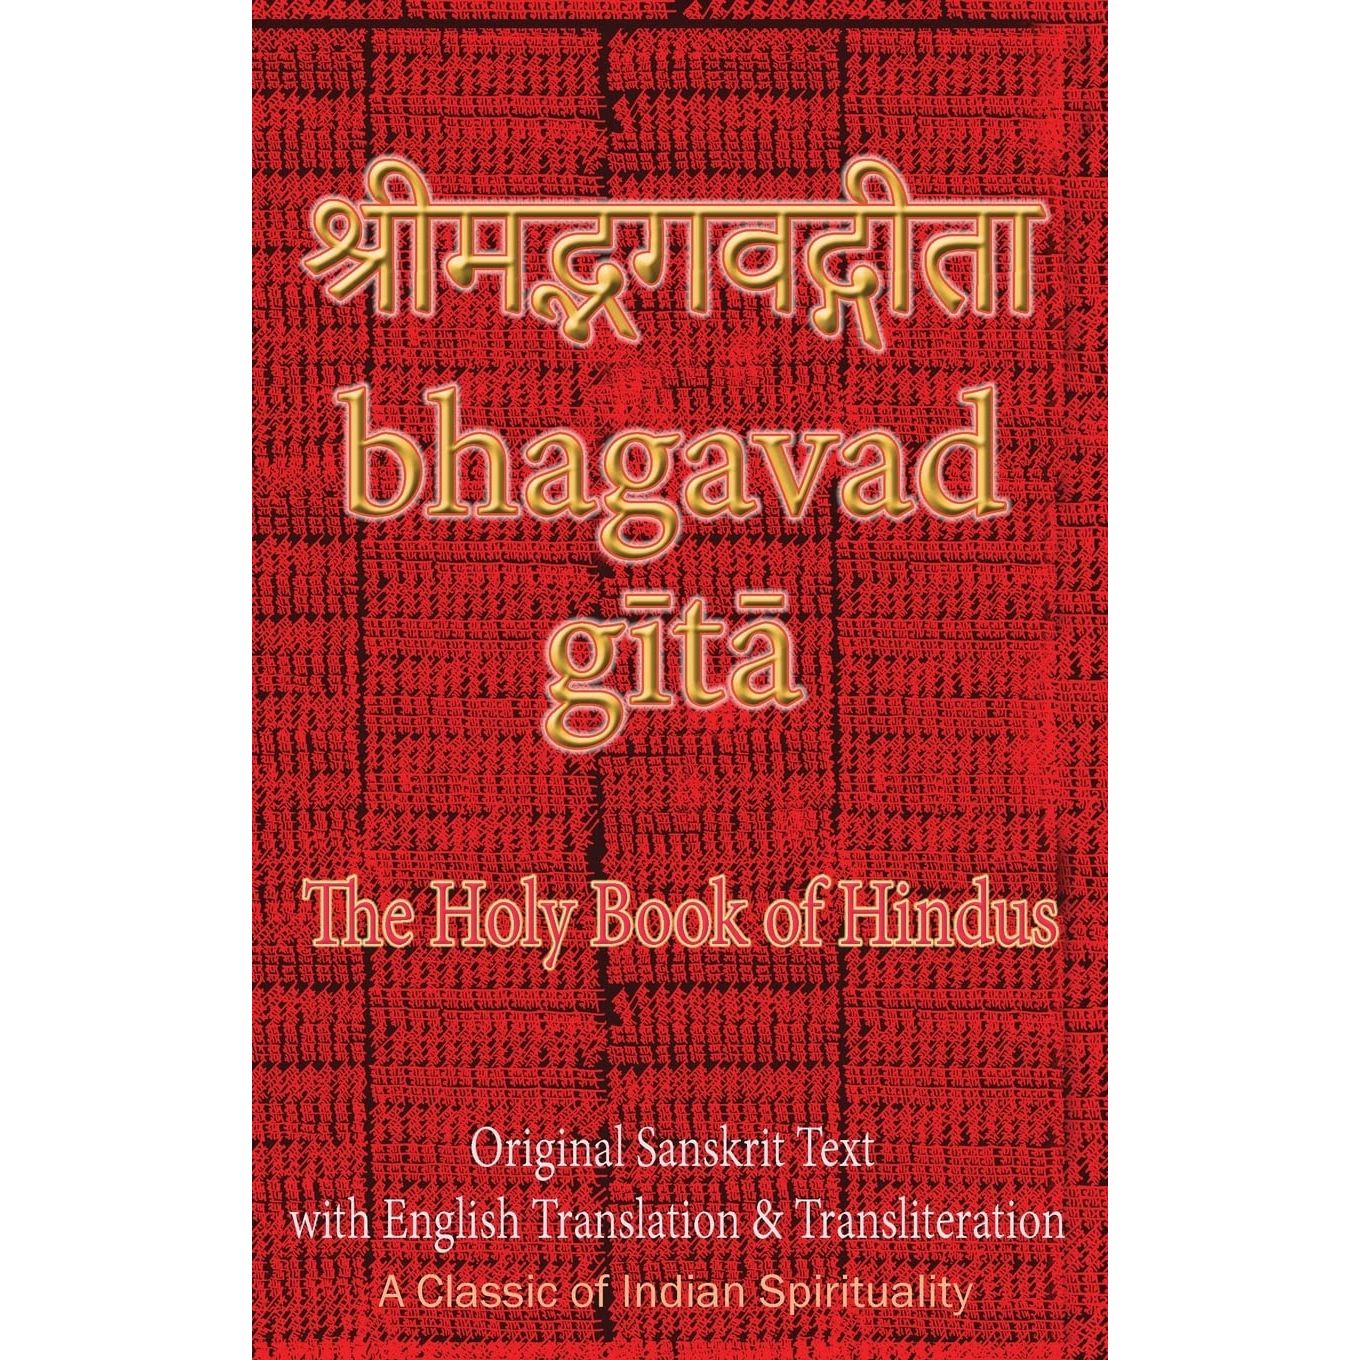 Bhagavad Gita, The Holy Book of Hindus: Original Sanskrit Text with English Translation & Transliteration ~ A Classic of Indian Spirituality